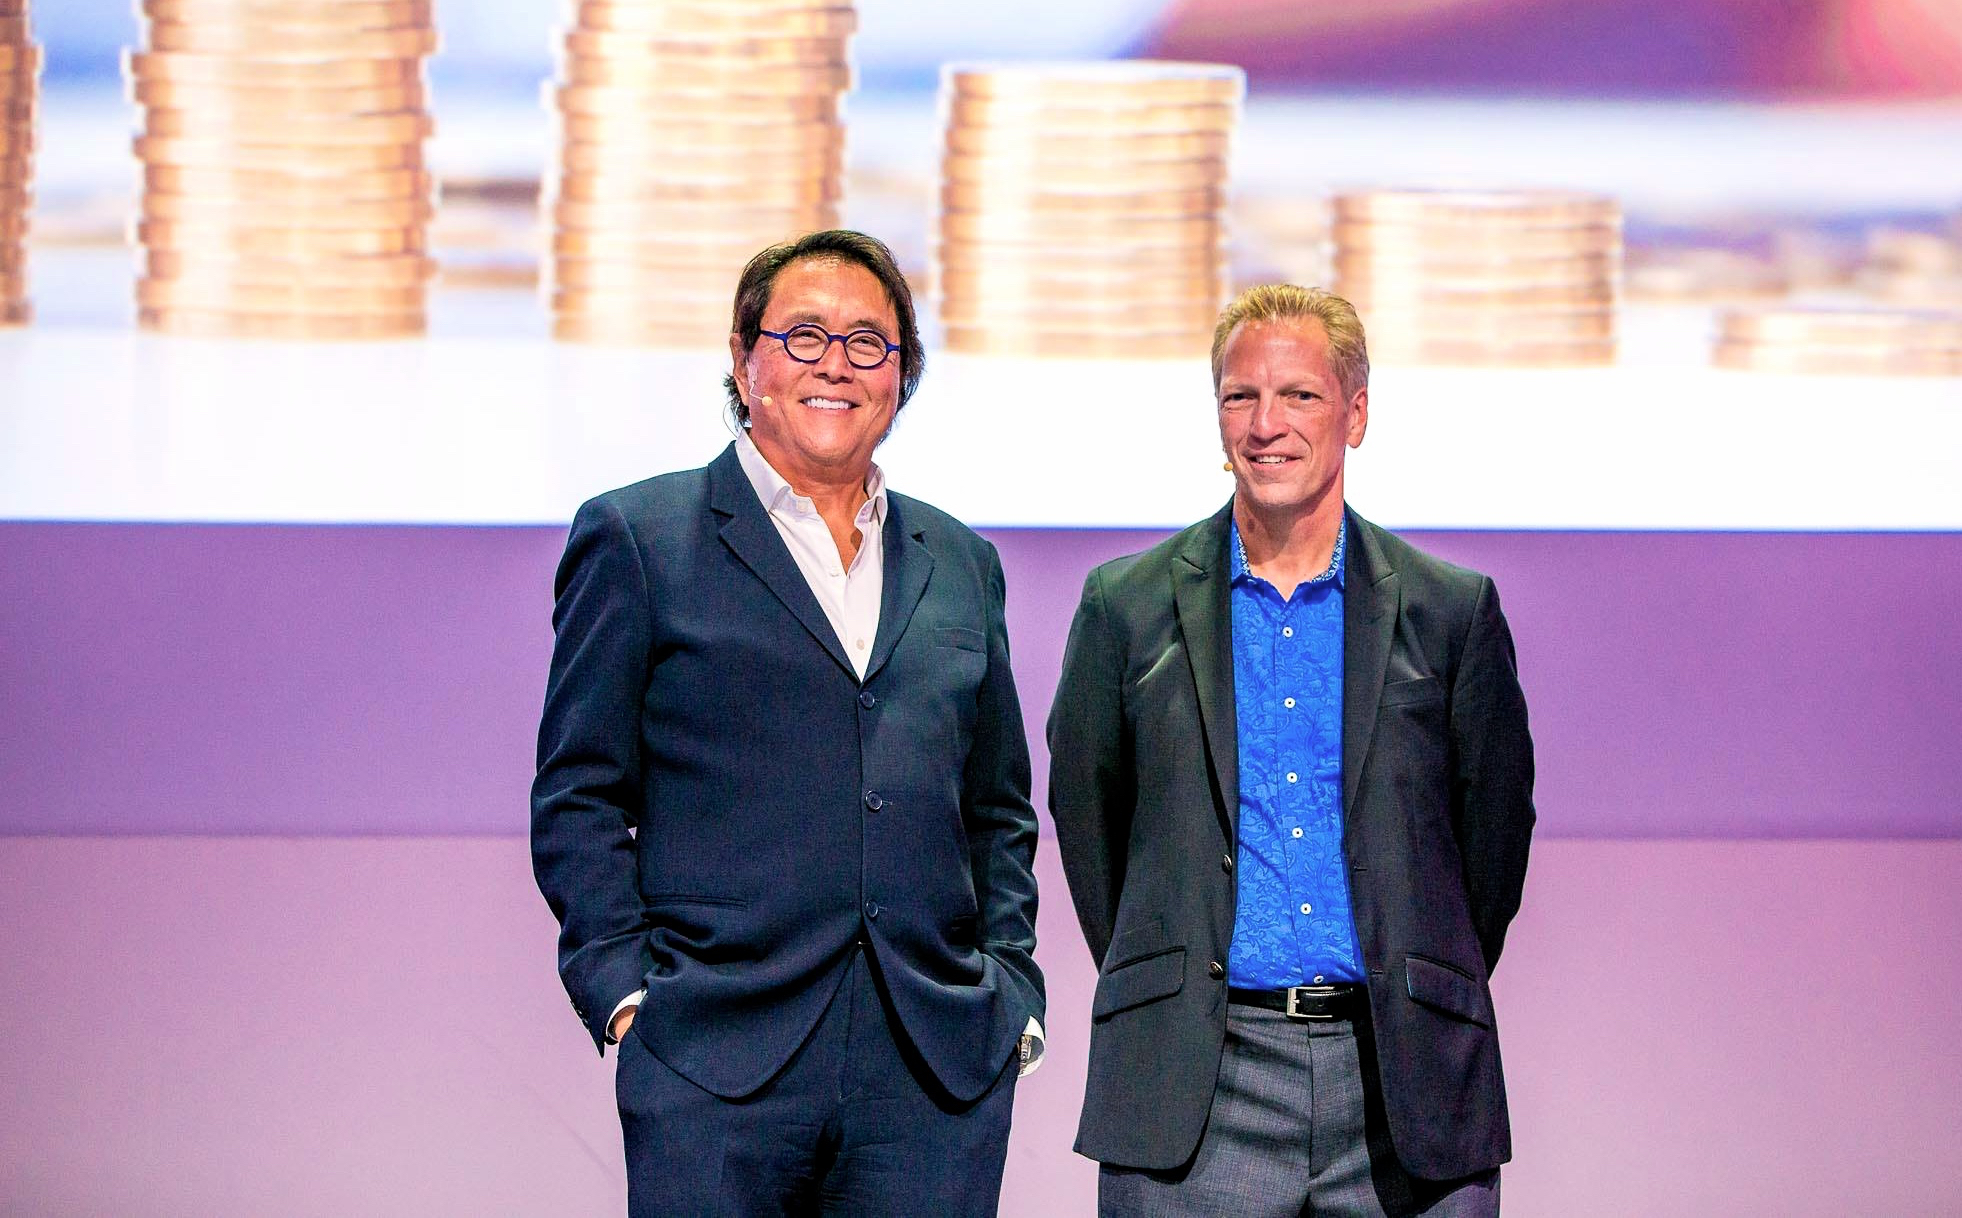 Robert Kiyosaki (Rich Dad Poor Dad) and Tom Wheelwright (Robert Kiyosaki's CPA and Tax-Free Wealth Author) frequently speak to Entrepreneurs globally